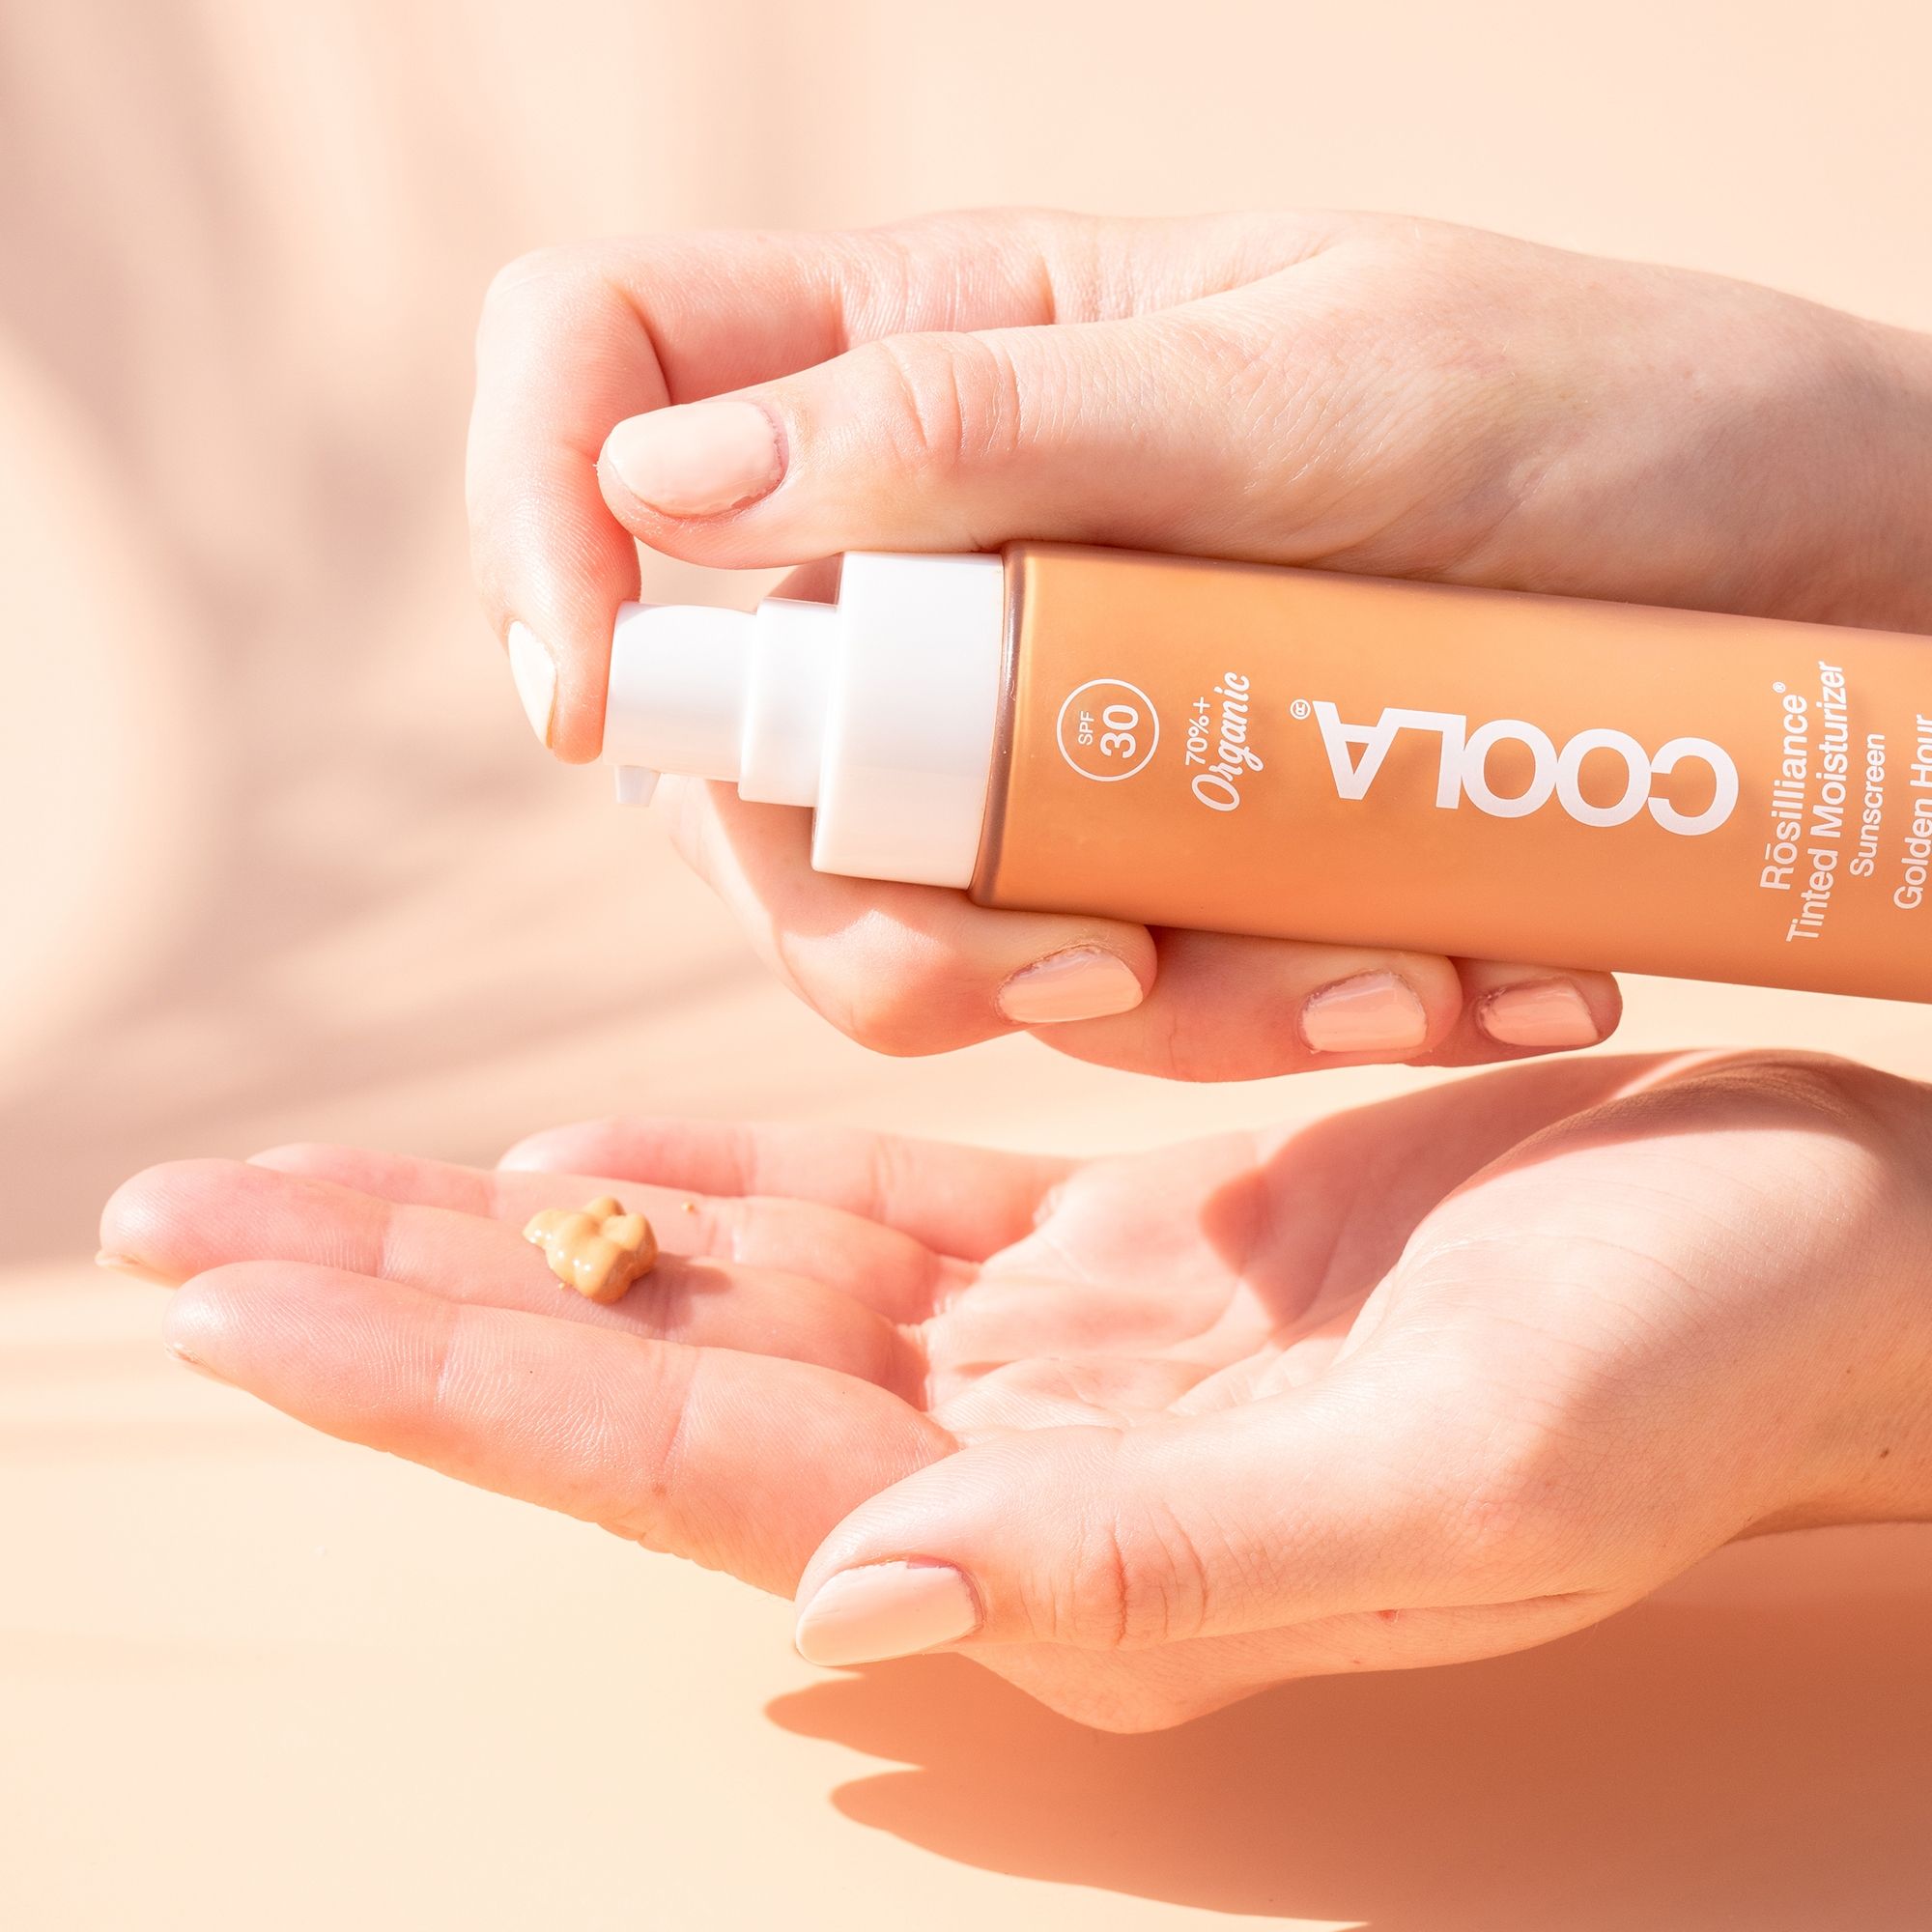 COOLA Rōsilliance® Tinted Facial Moisturizer Organic Sunscreen Cream, Golden Hour, SPF 30 - 1.5 fl oz